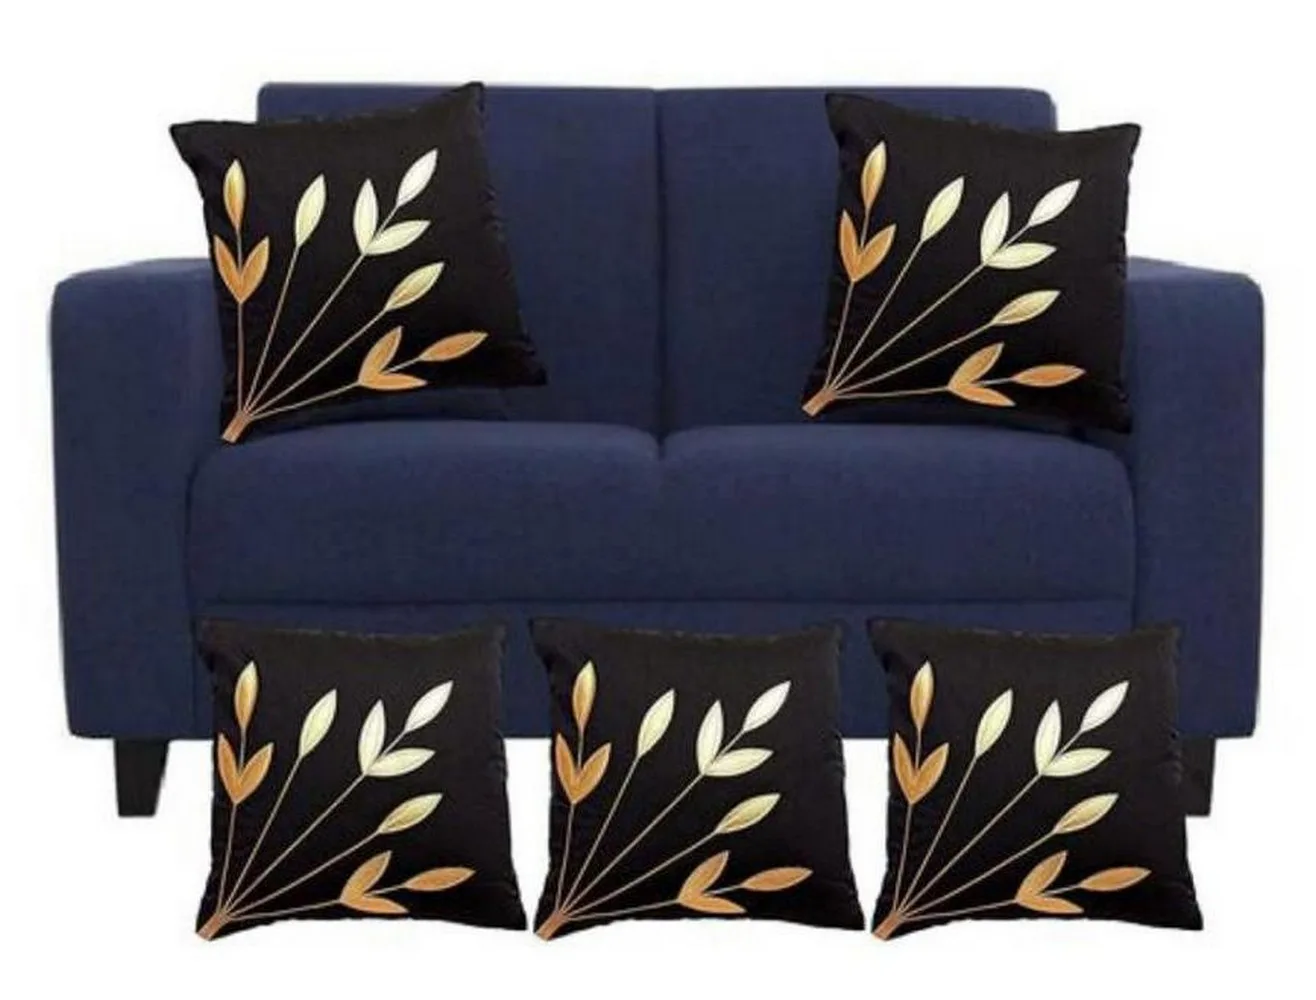 Leaf Cushion Cover, Dupion, Black, Set of 5, 16x16